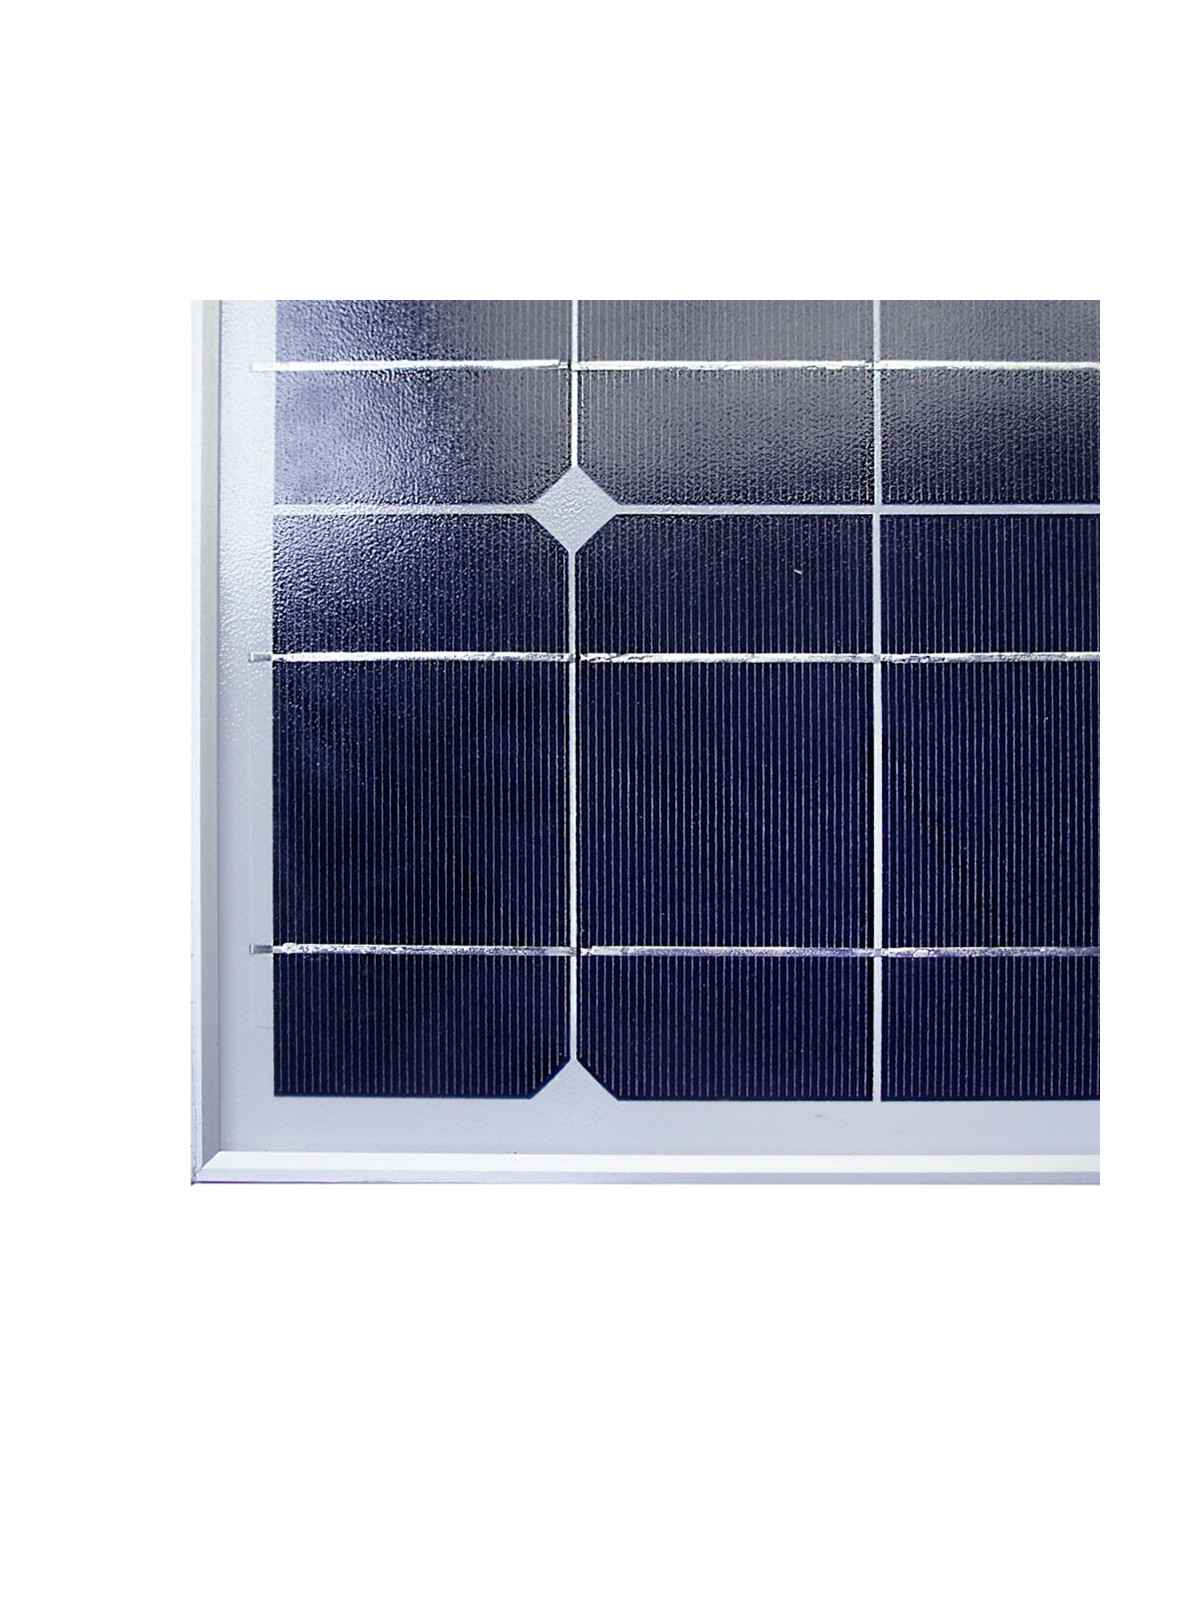 Panel fotovoltaico regulable de 50 Wp